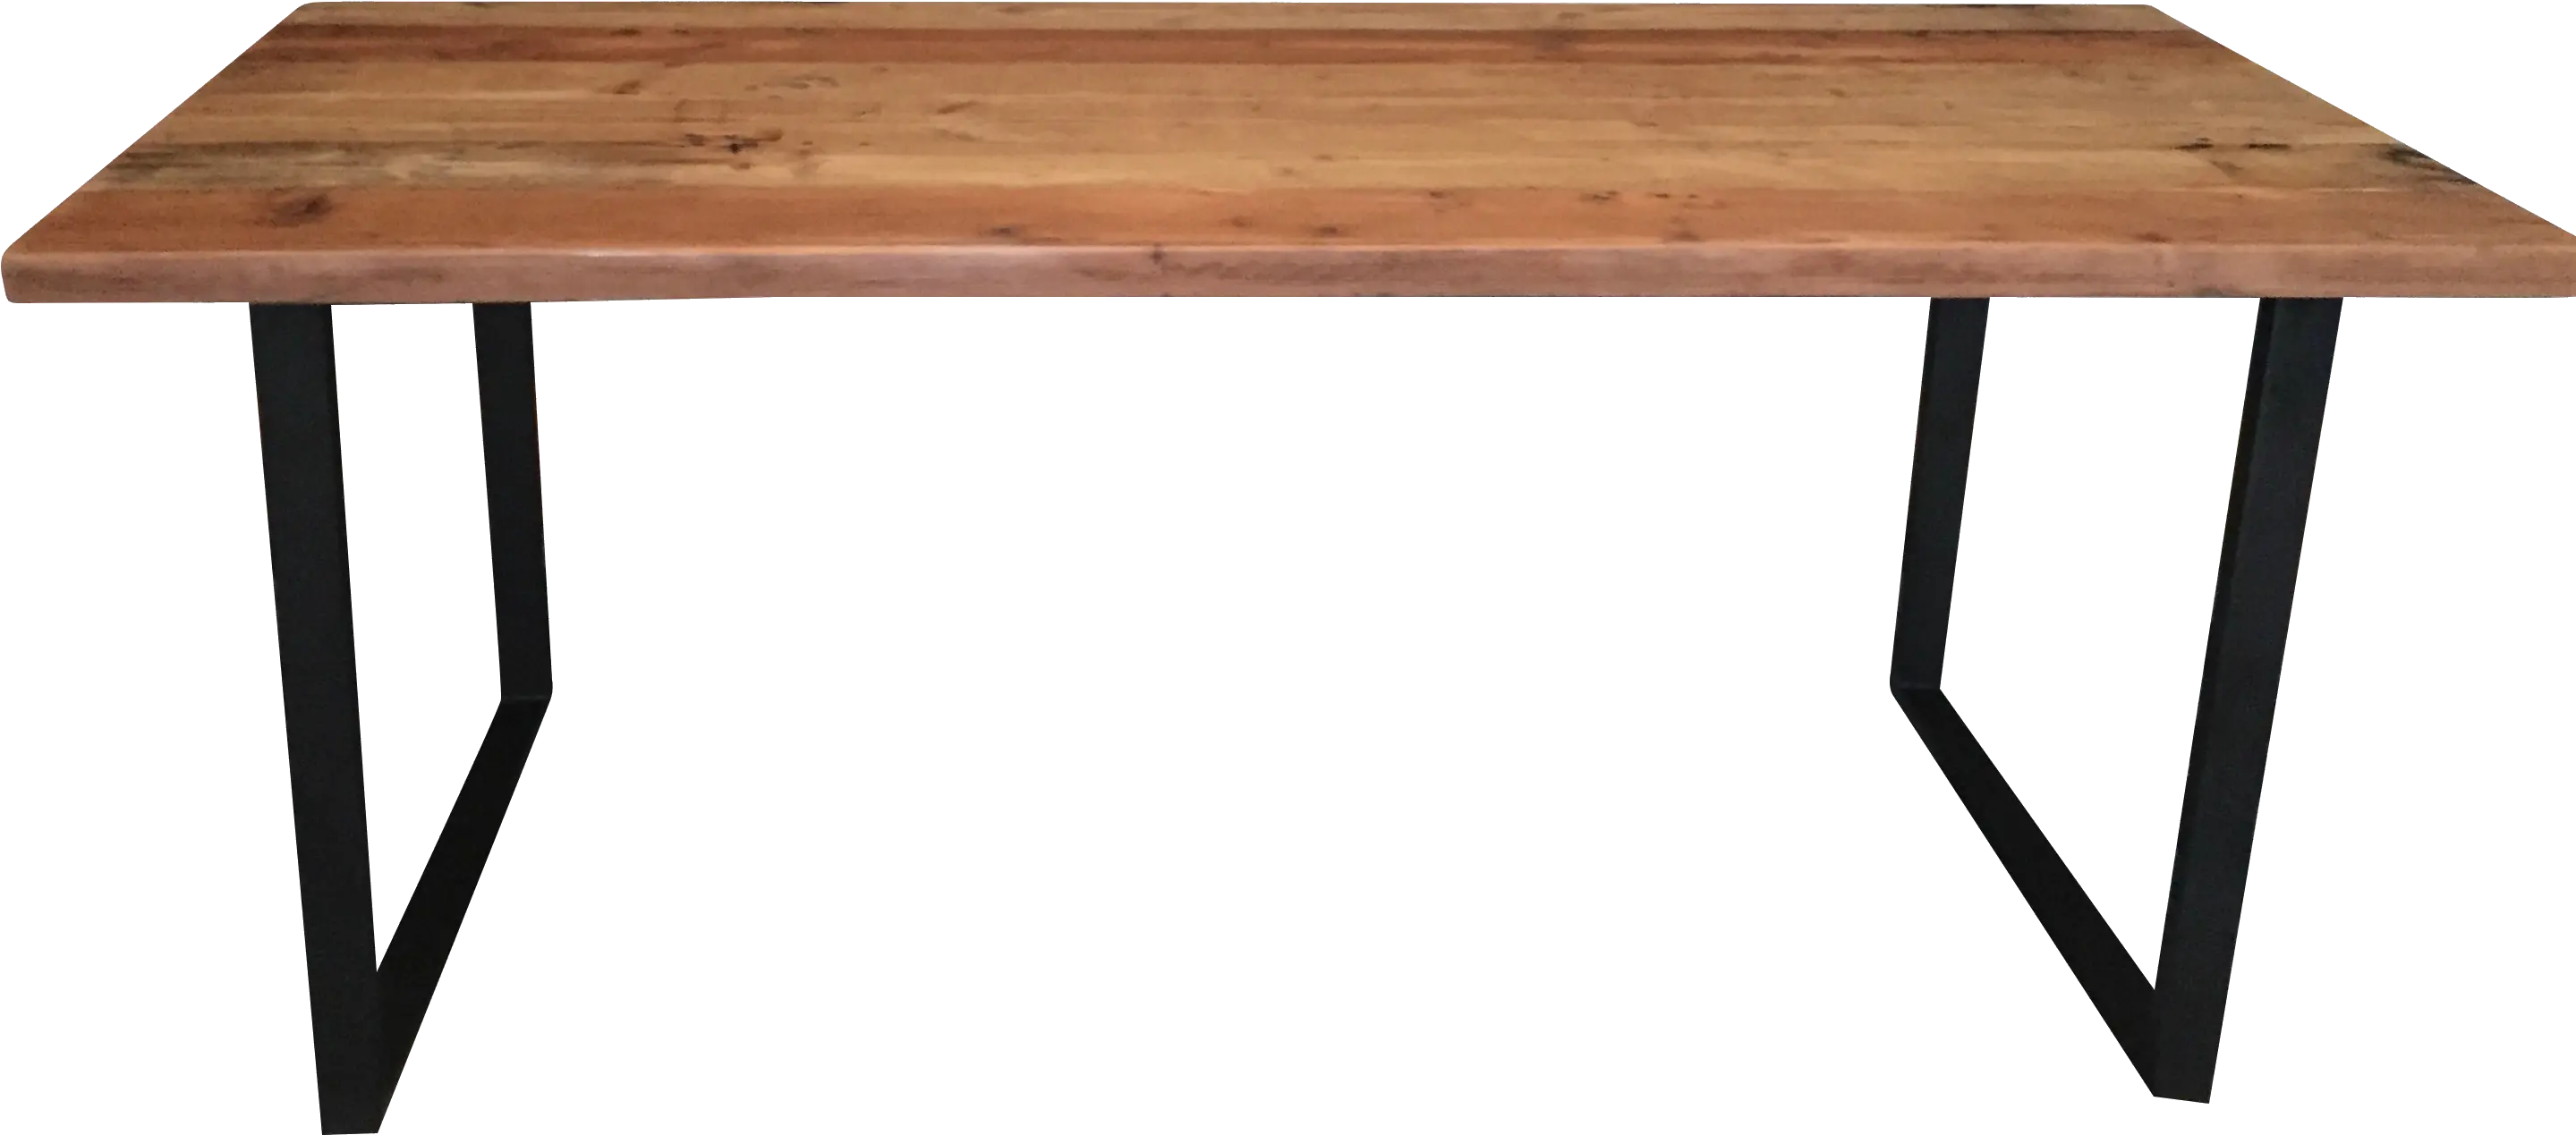 Reclaimed Wood Table With U Shaped Legs Transparent Wooden Desk Png Desk Transparent